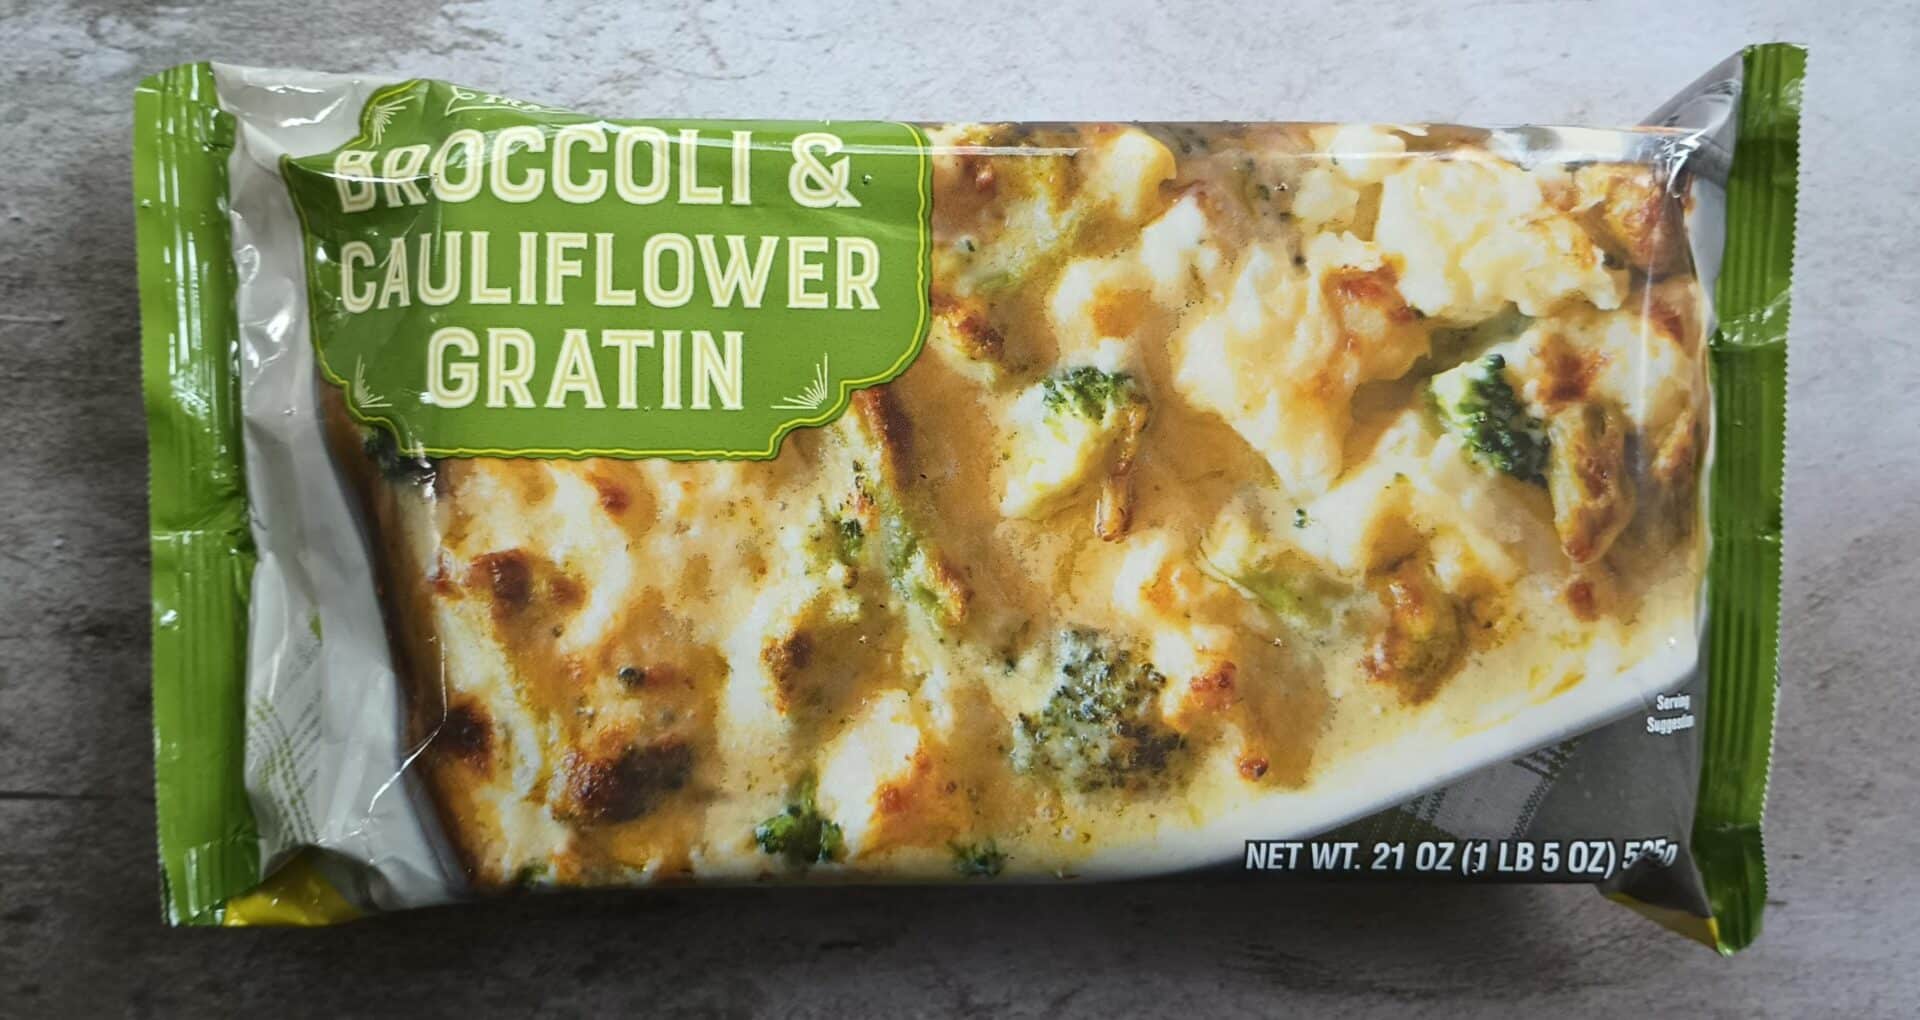 Trader Joe's Broccoli and Cauliflower Gratin